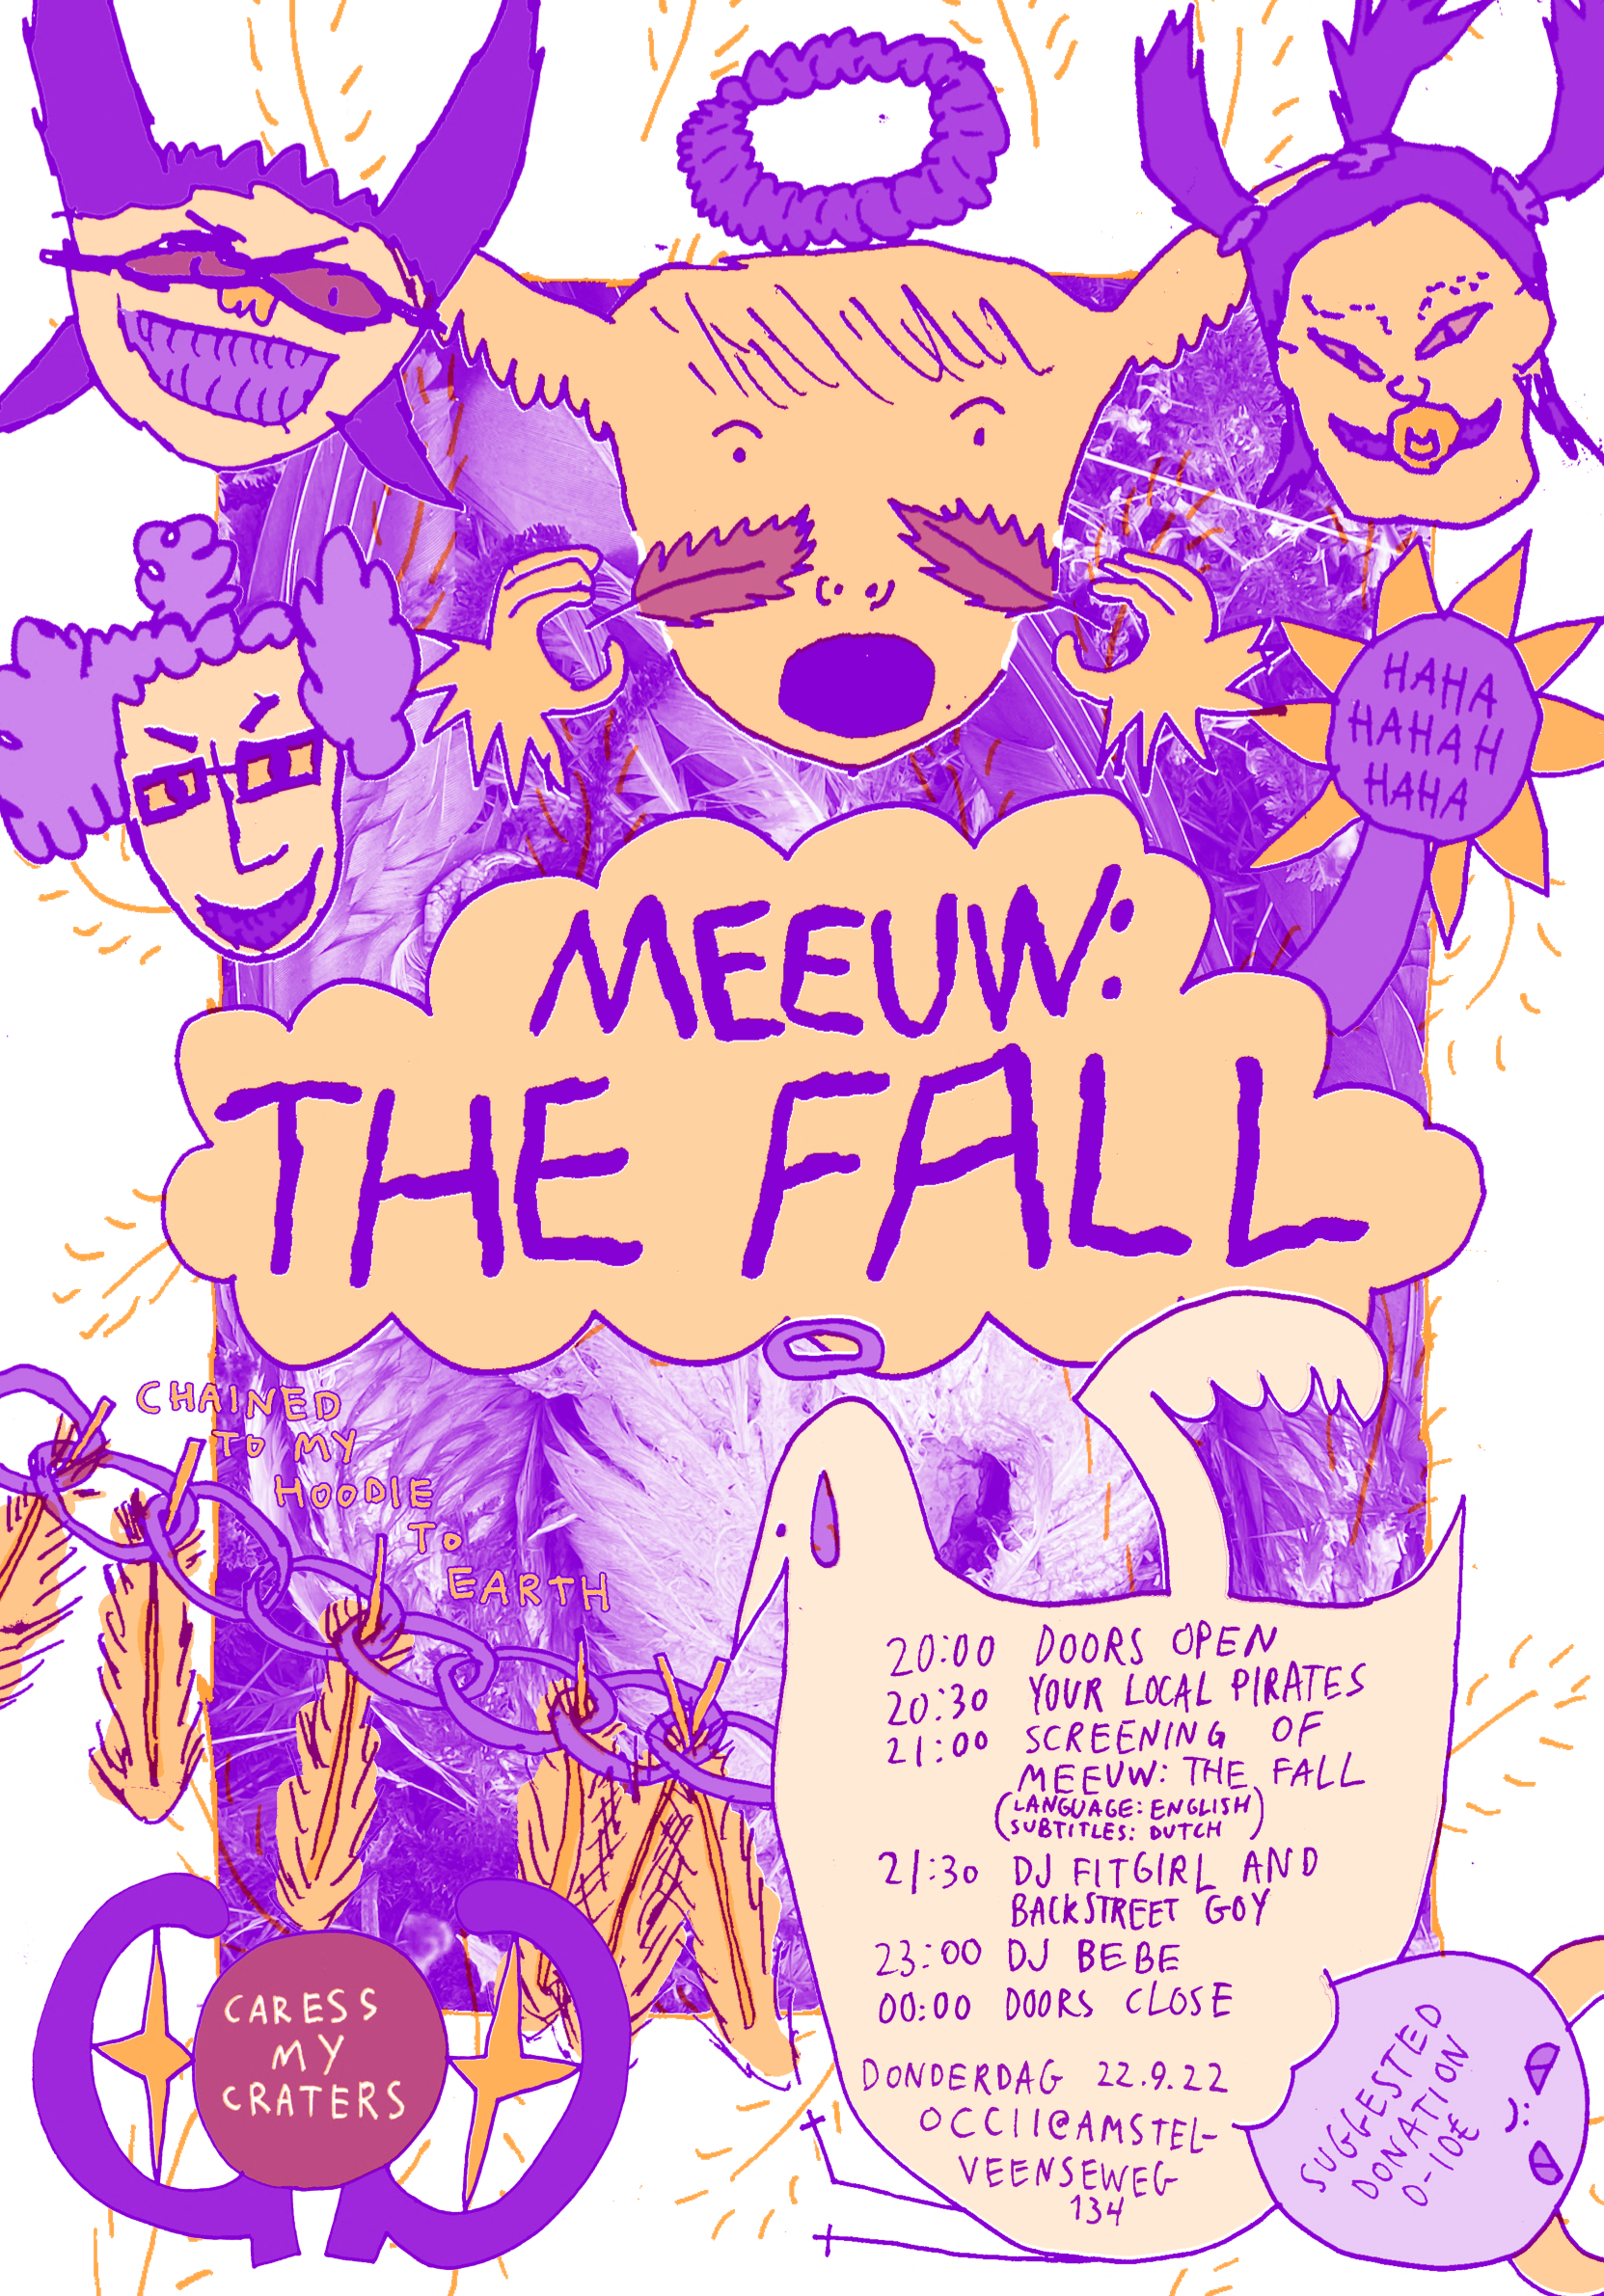 MEEUW: The Fall (screening) + Your Local Pirates + DJ Fitgirl + Backstreet Goy + DJ Bebe